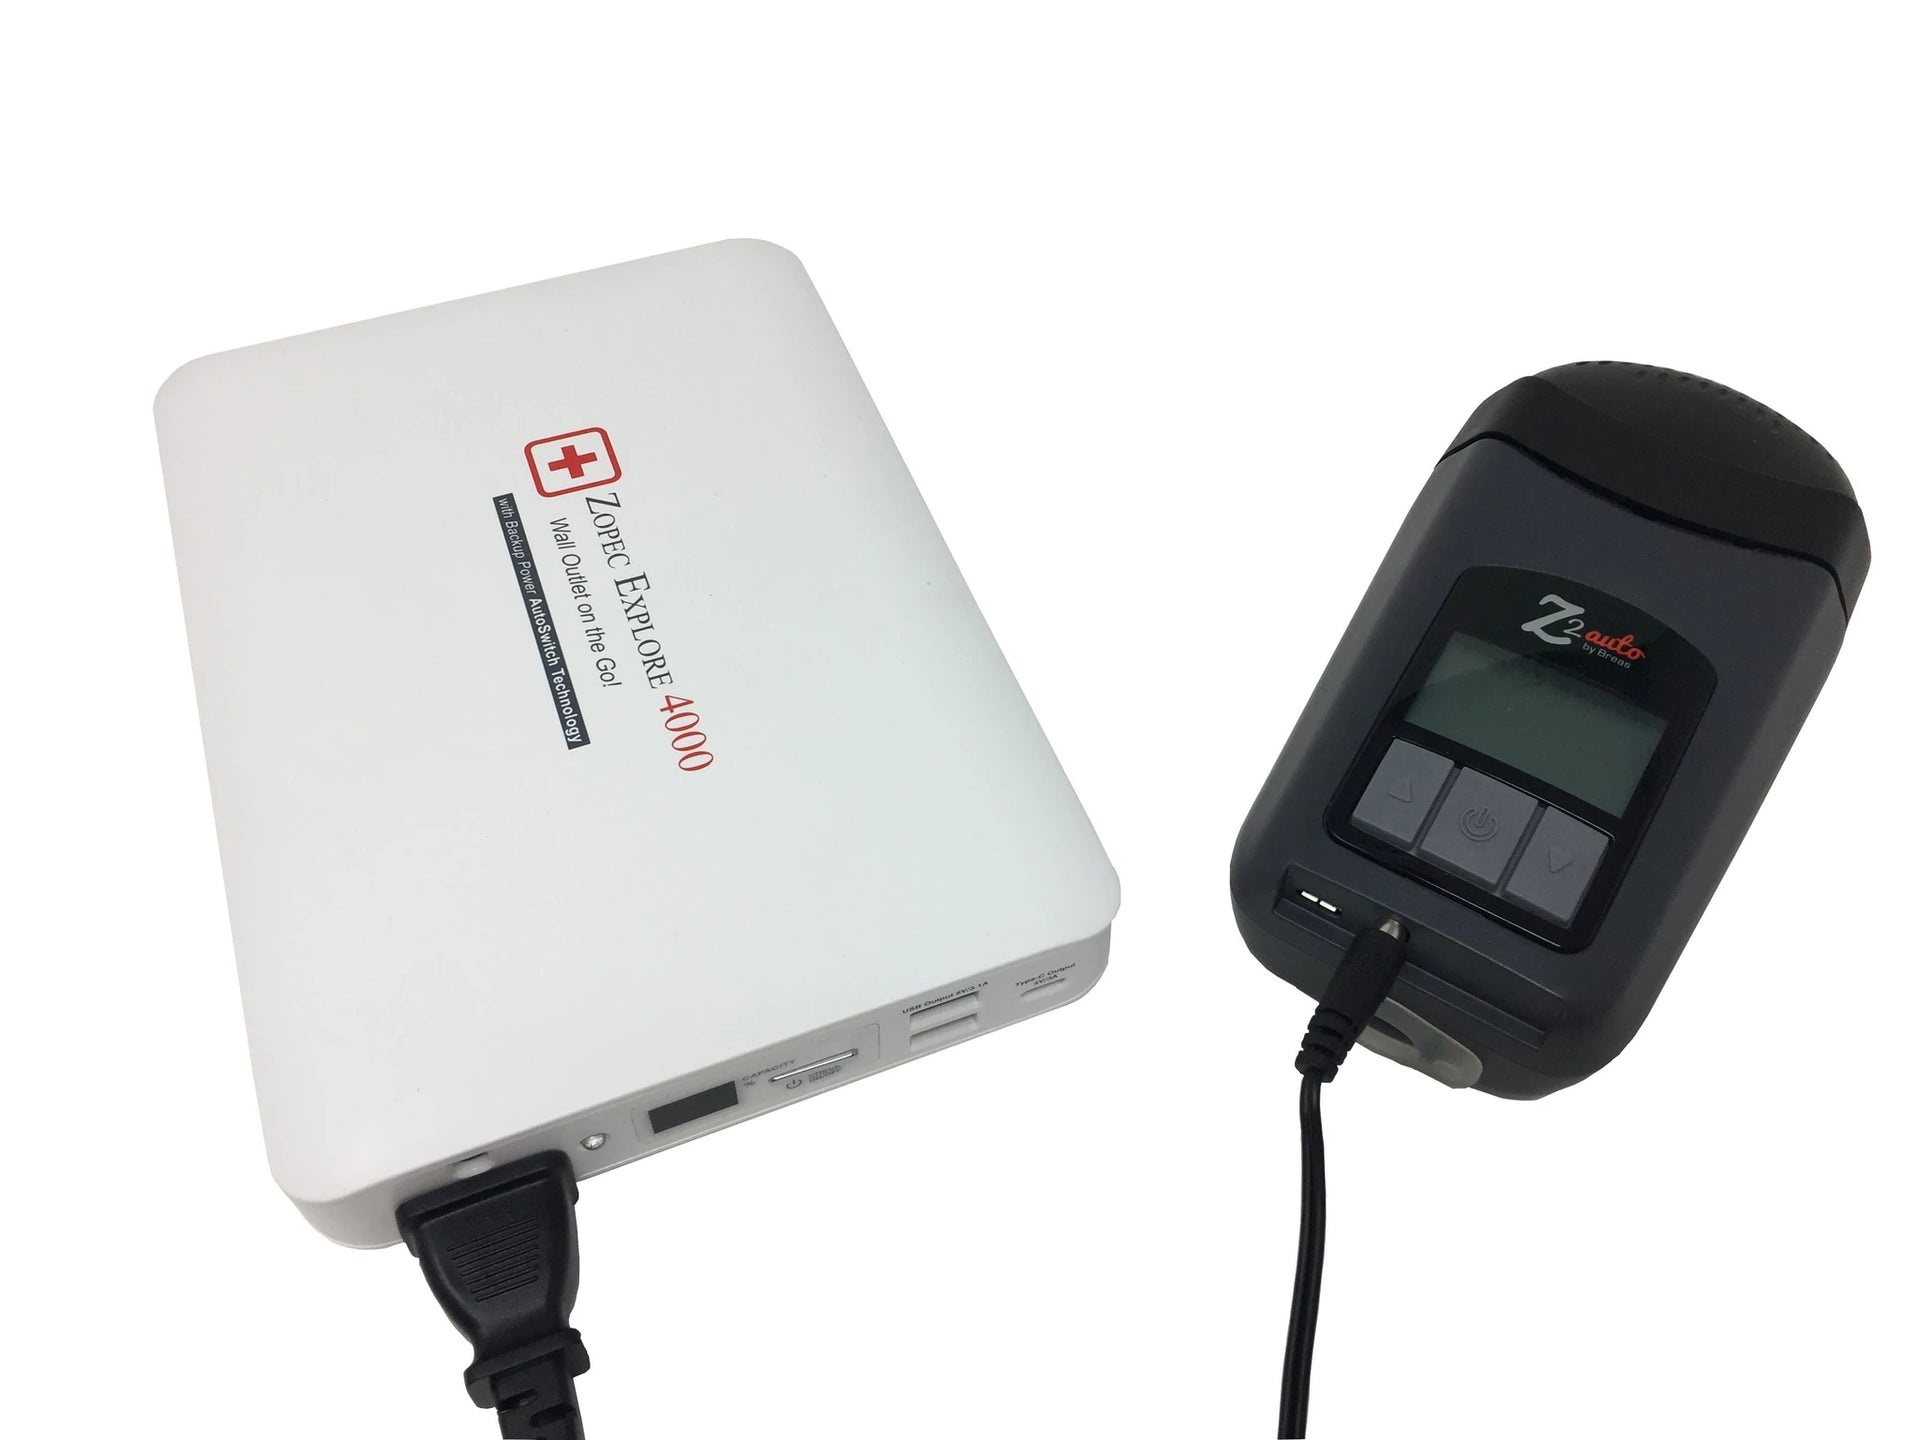 Zopec Medical Explore 4000 Universal Portable CPAP Battery & Power Bank - Senior.com Portable Battery Packs